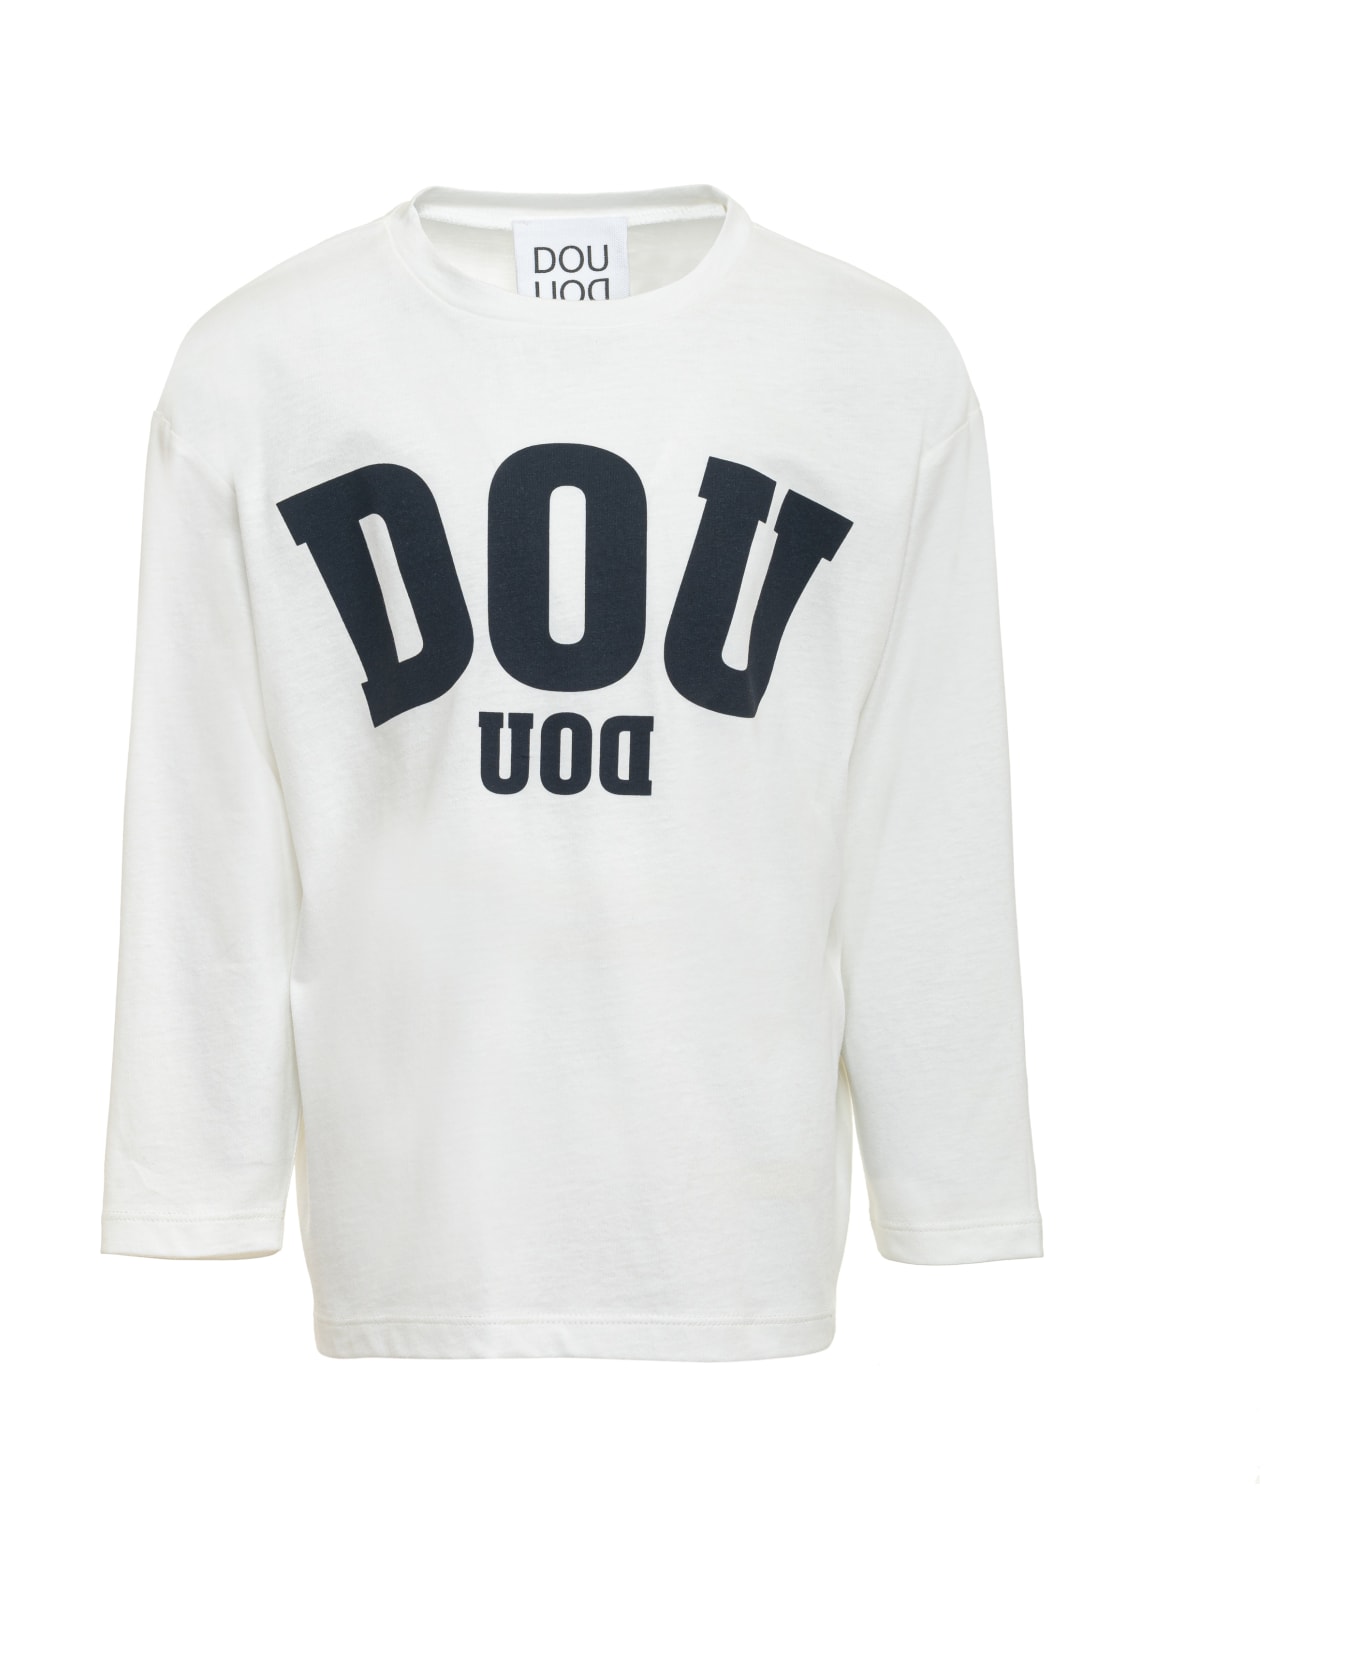 Douuod Long-sleeved Printed T-shirt - Cream